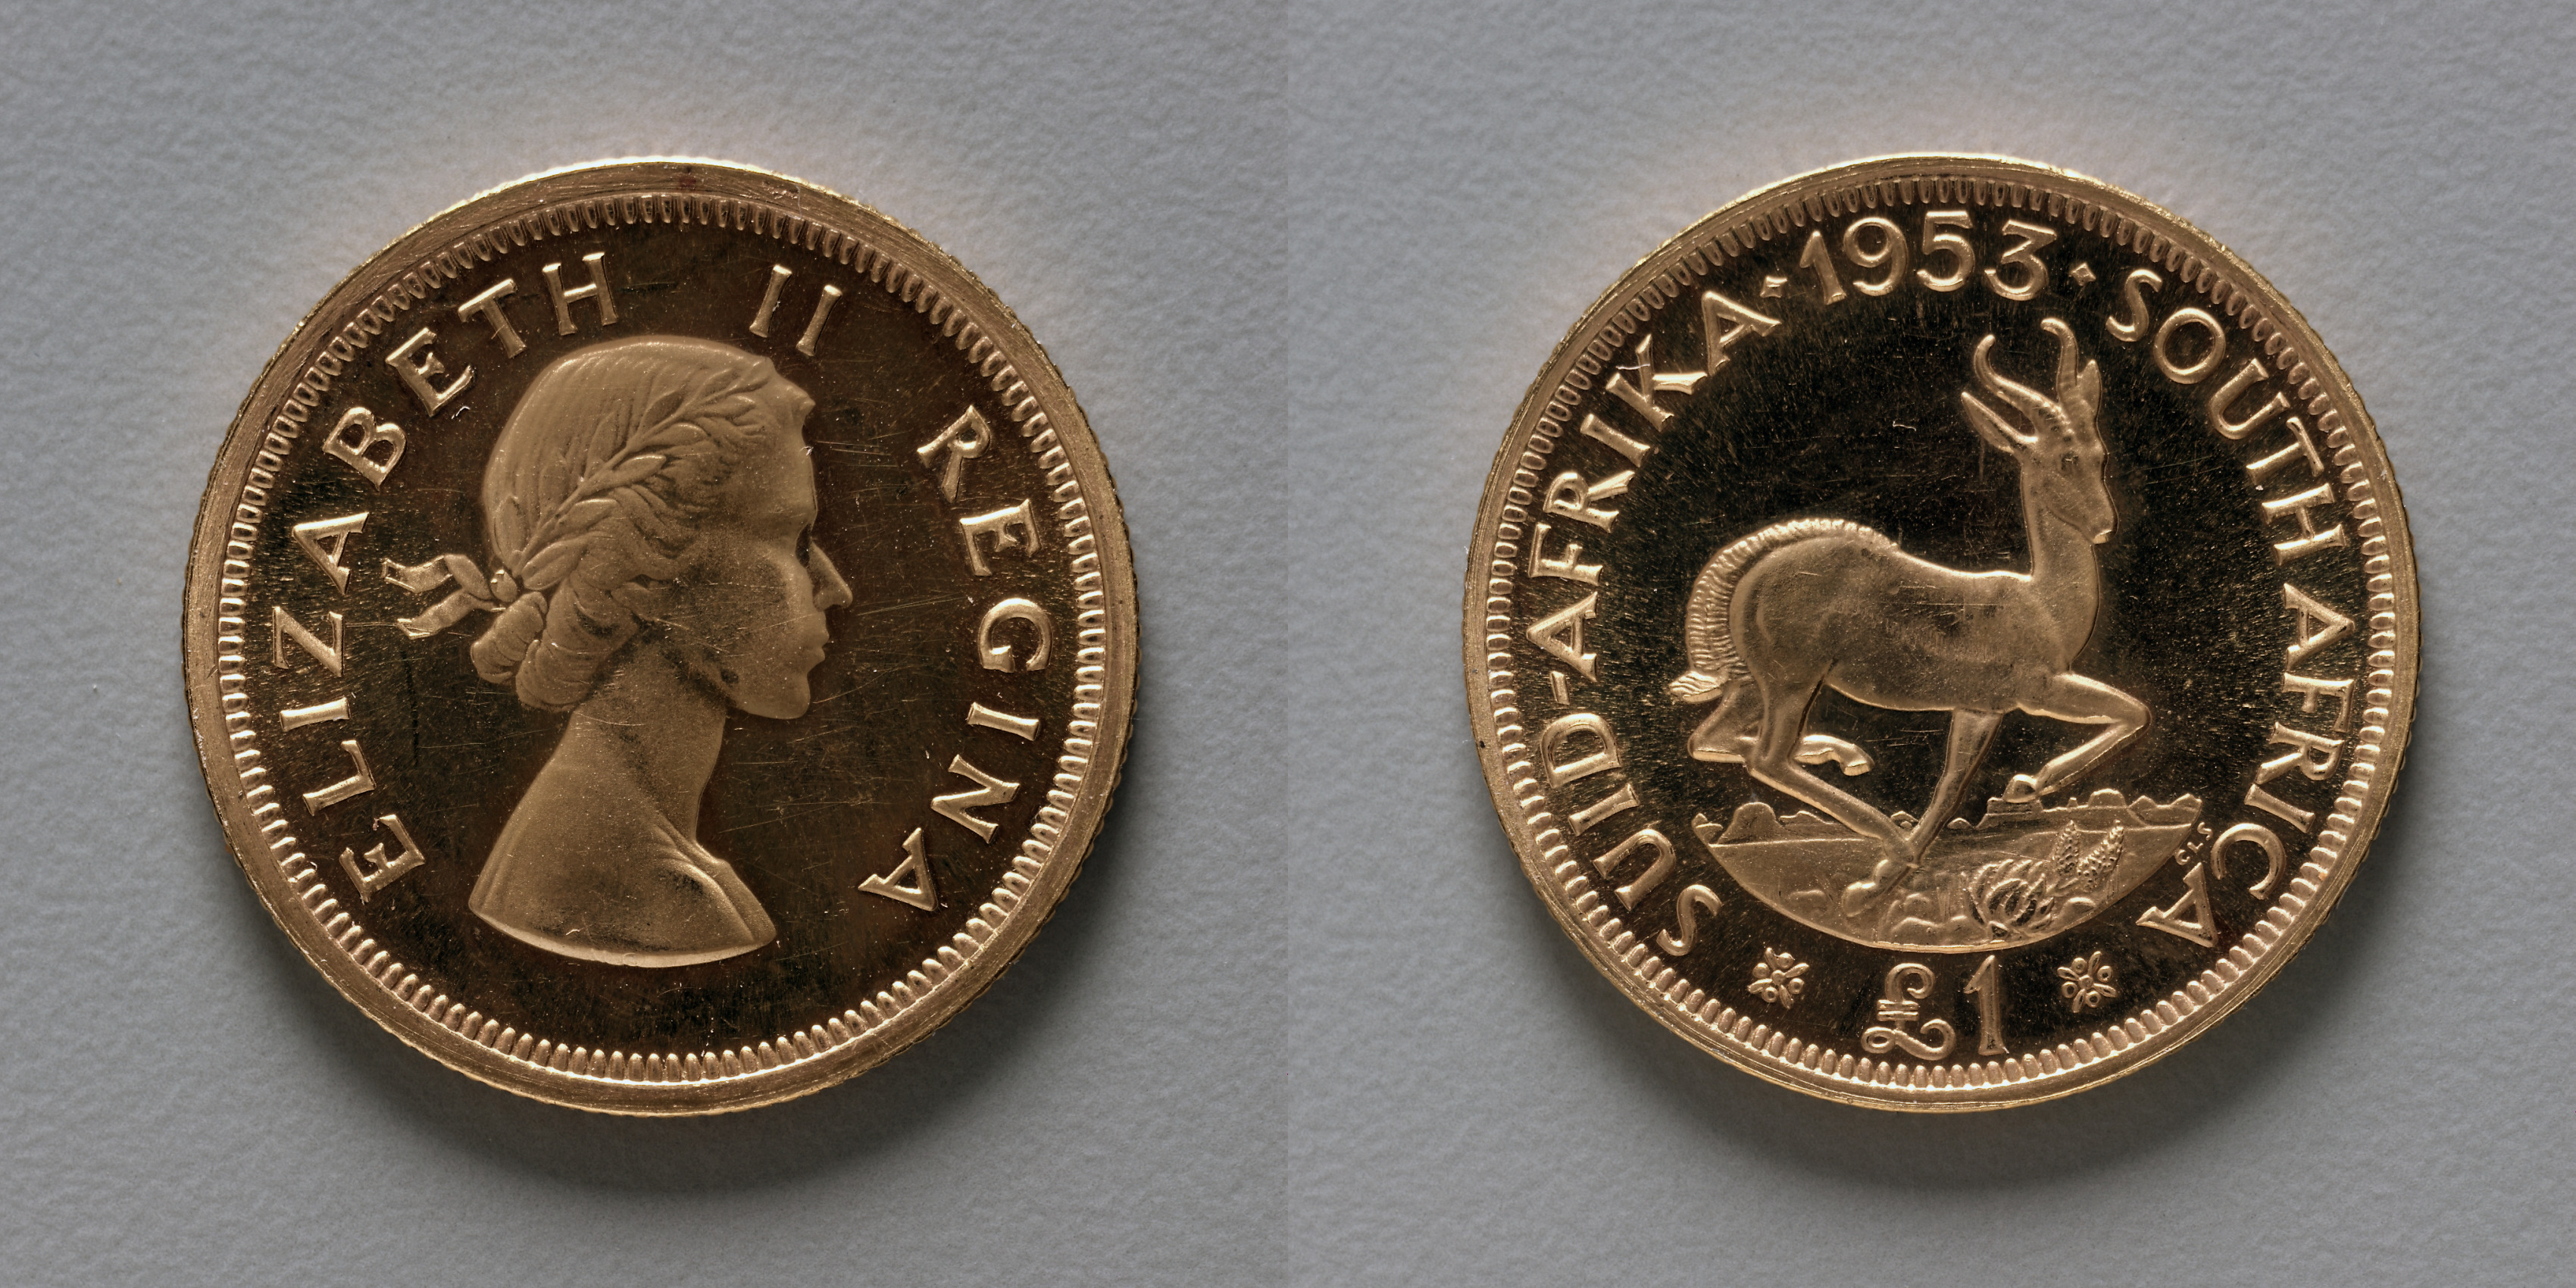 Pound: Elizabeth II (obverse); Springbok (reverse)